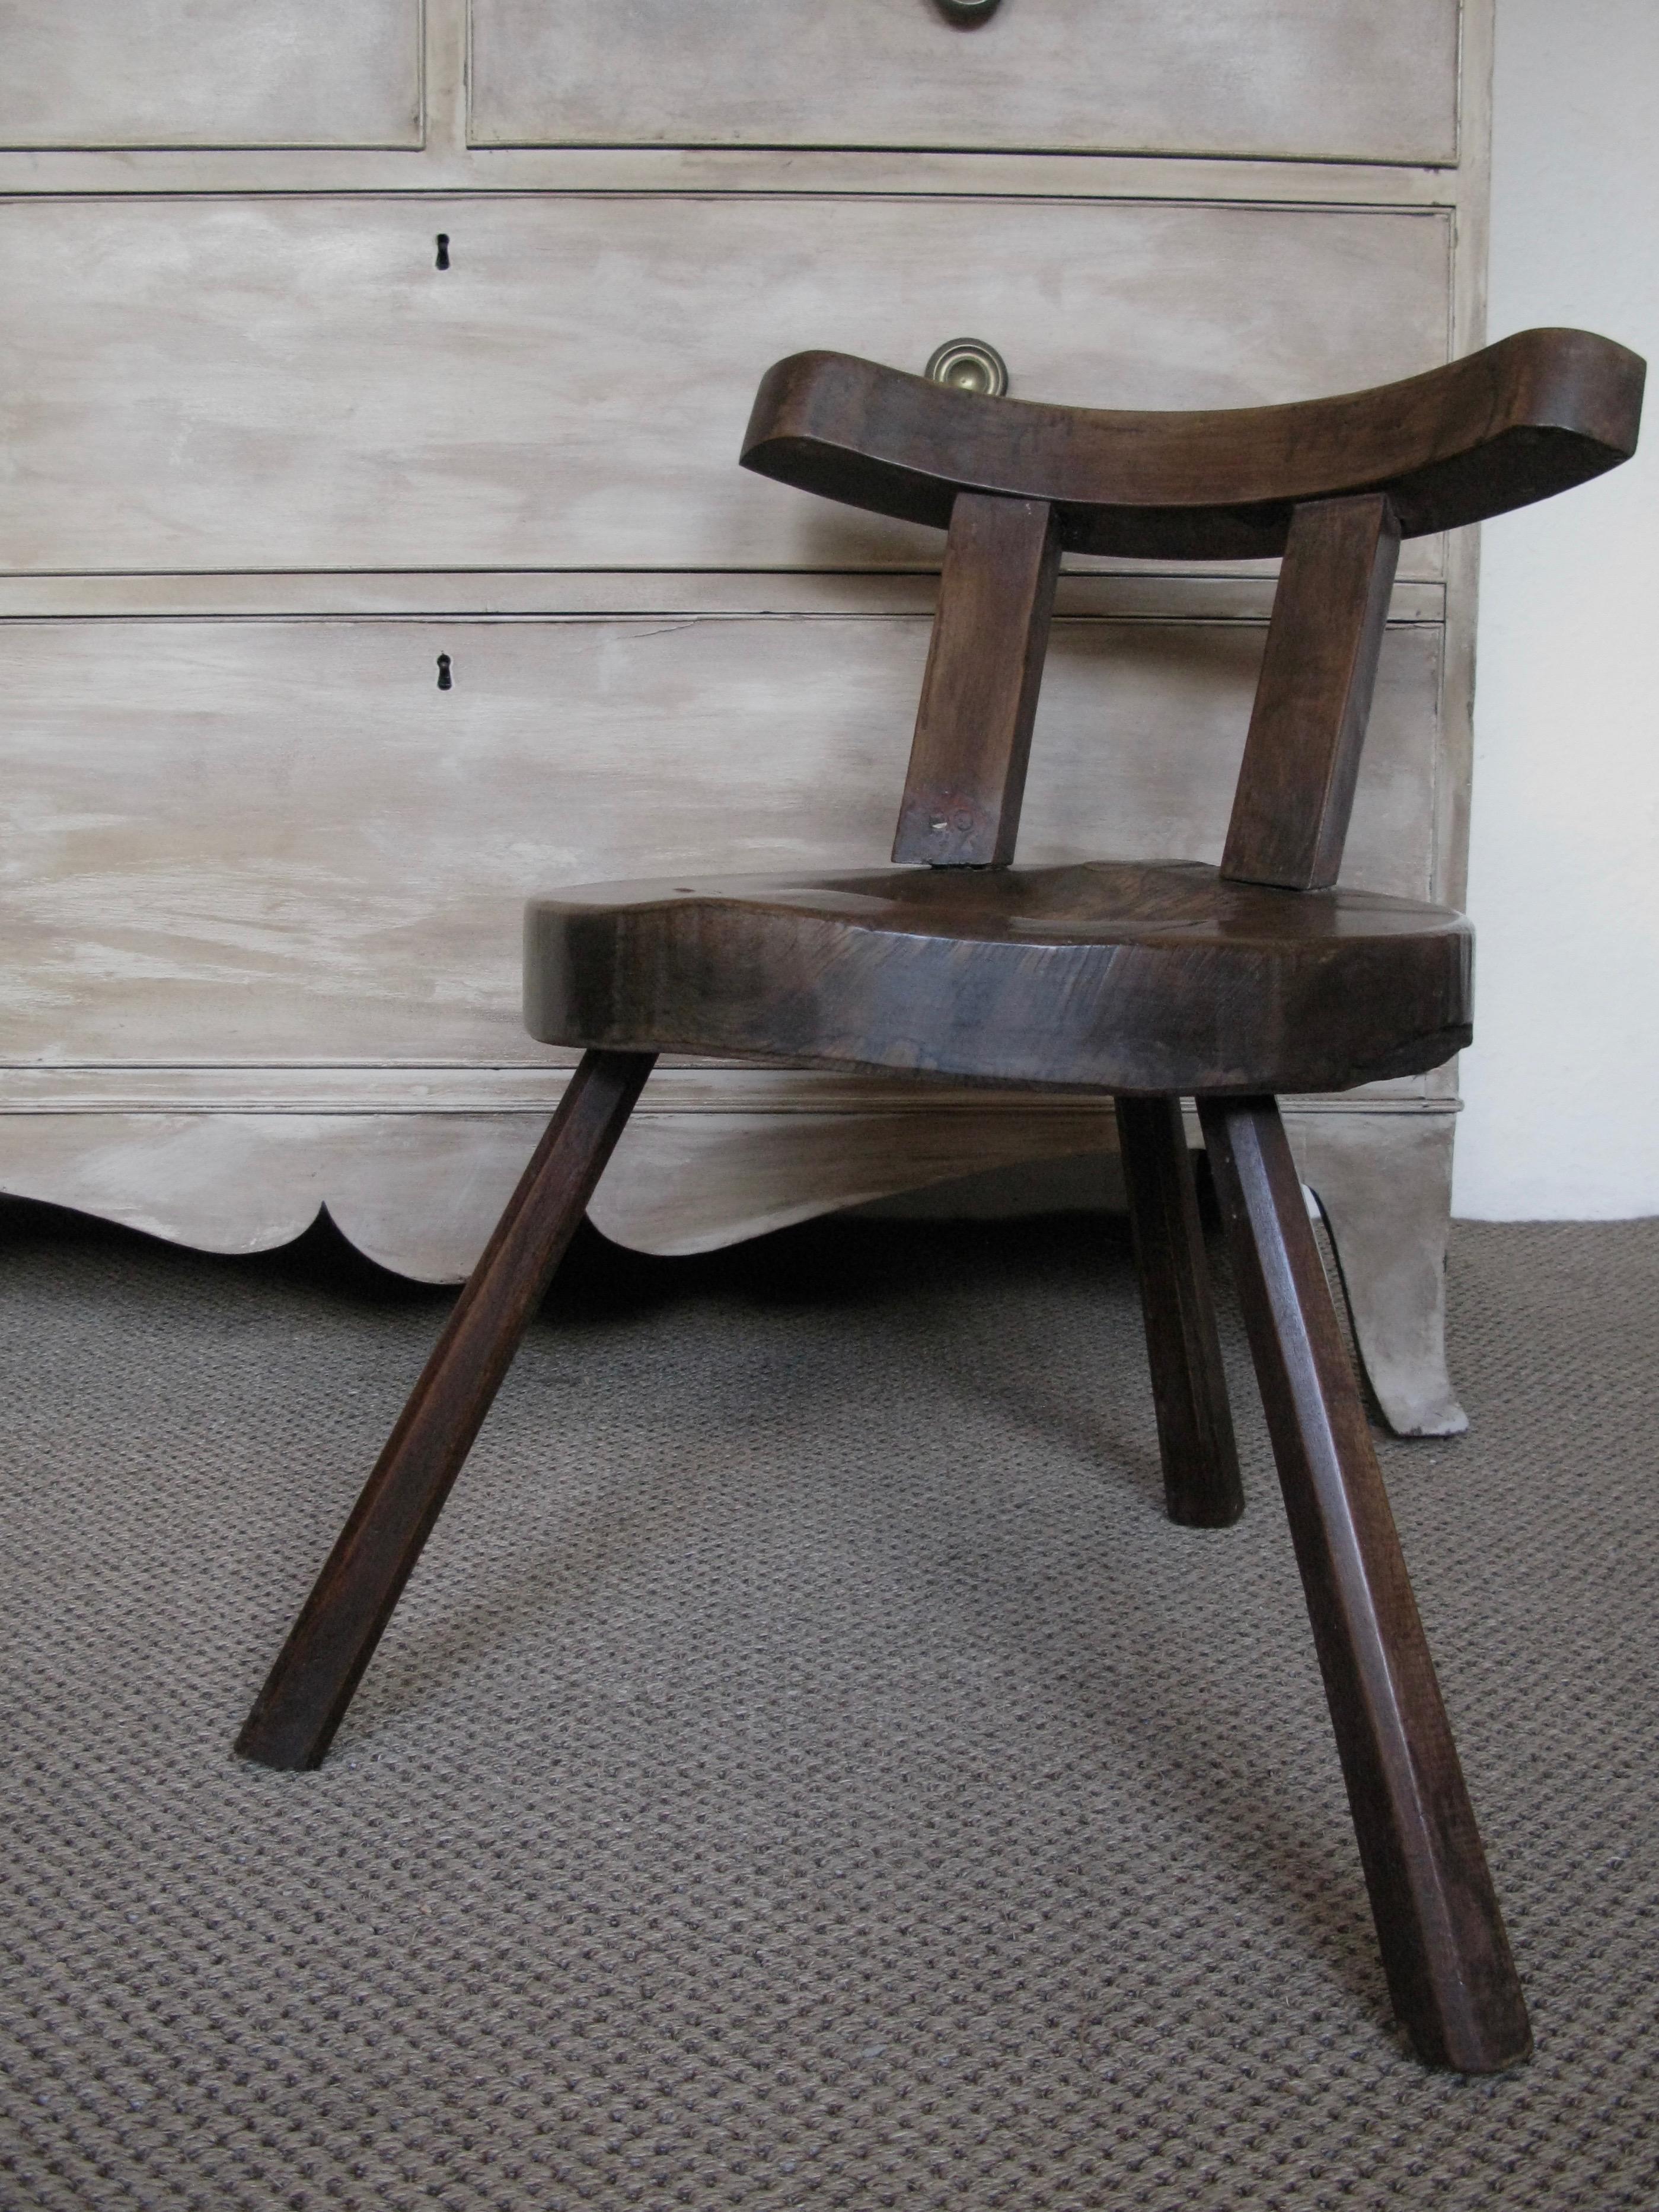 Primitive Design, Country Style, Chair, Art, Working Chair, Wine, Stool (Britisch)